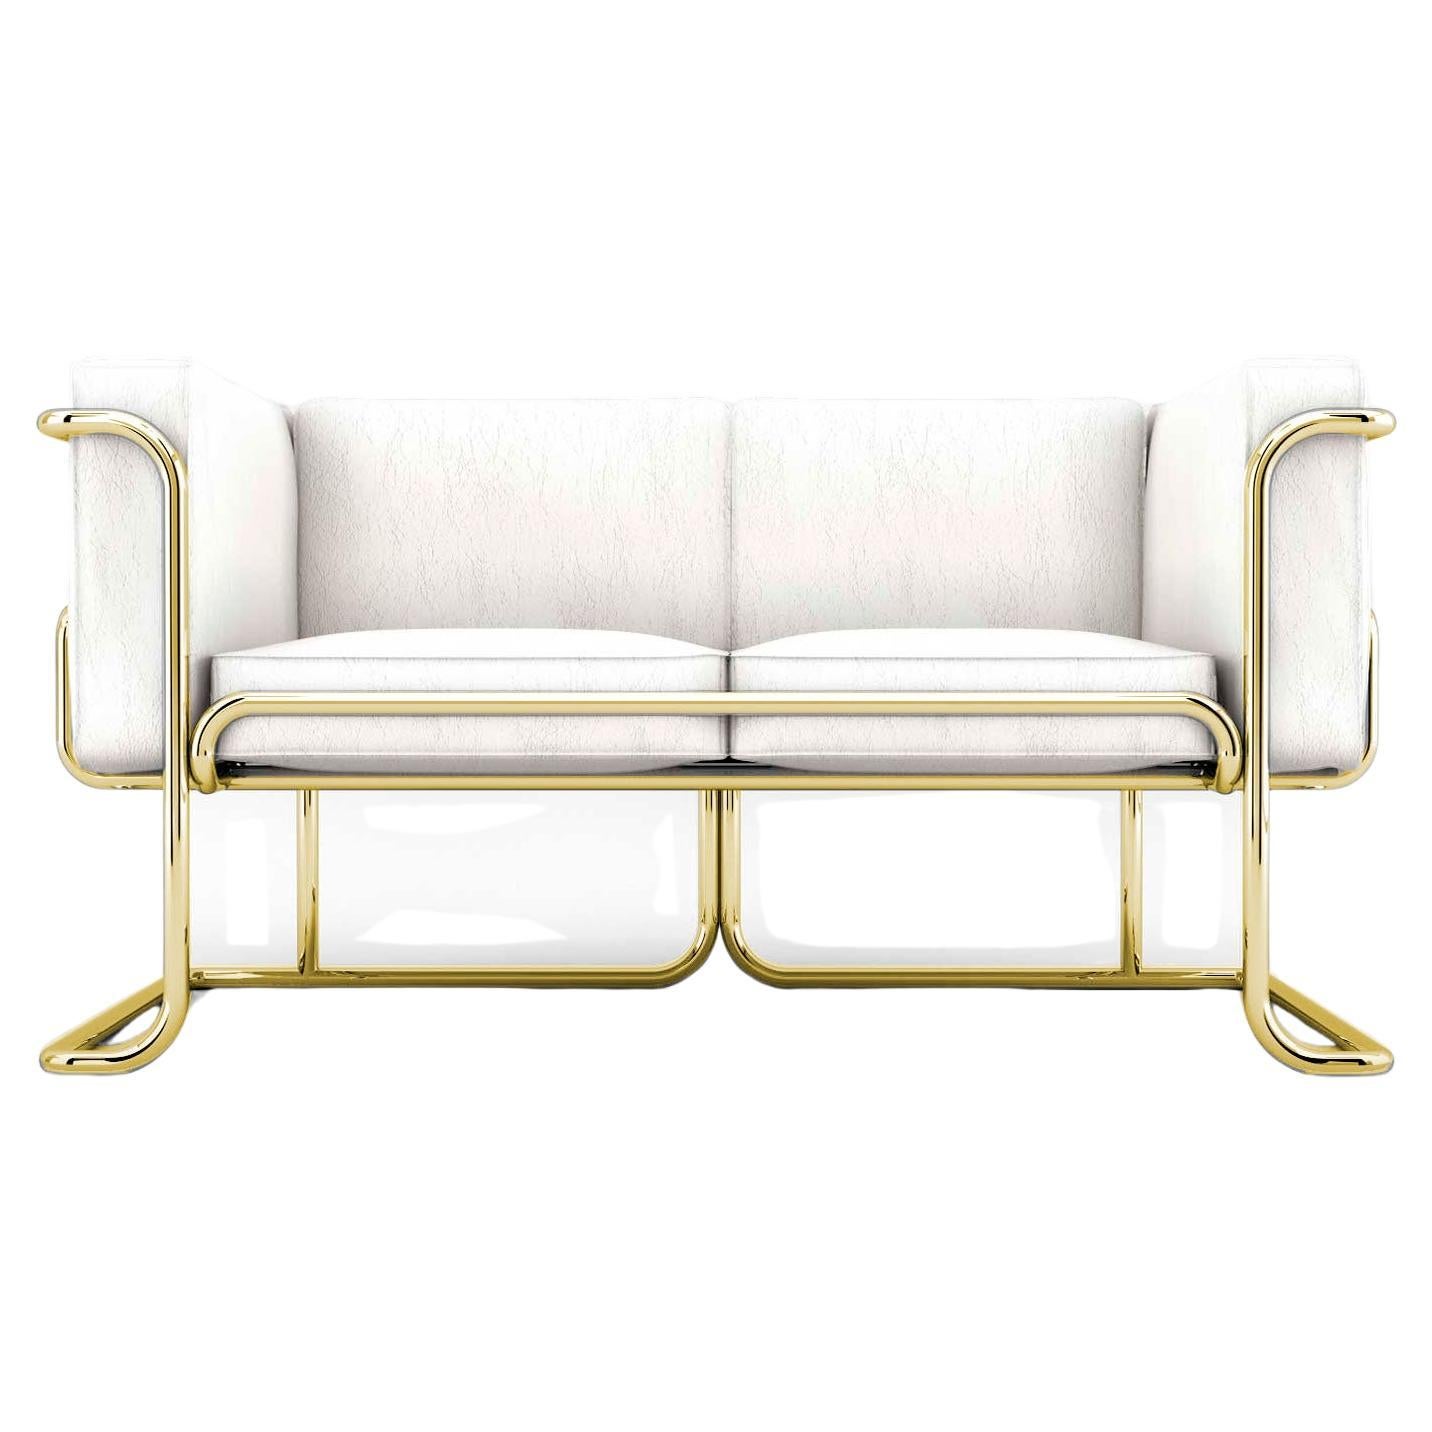 Lotus 2 Seat Sofa - Modern White Leather Sofa with Brass Legs